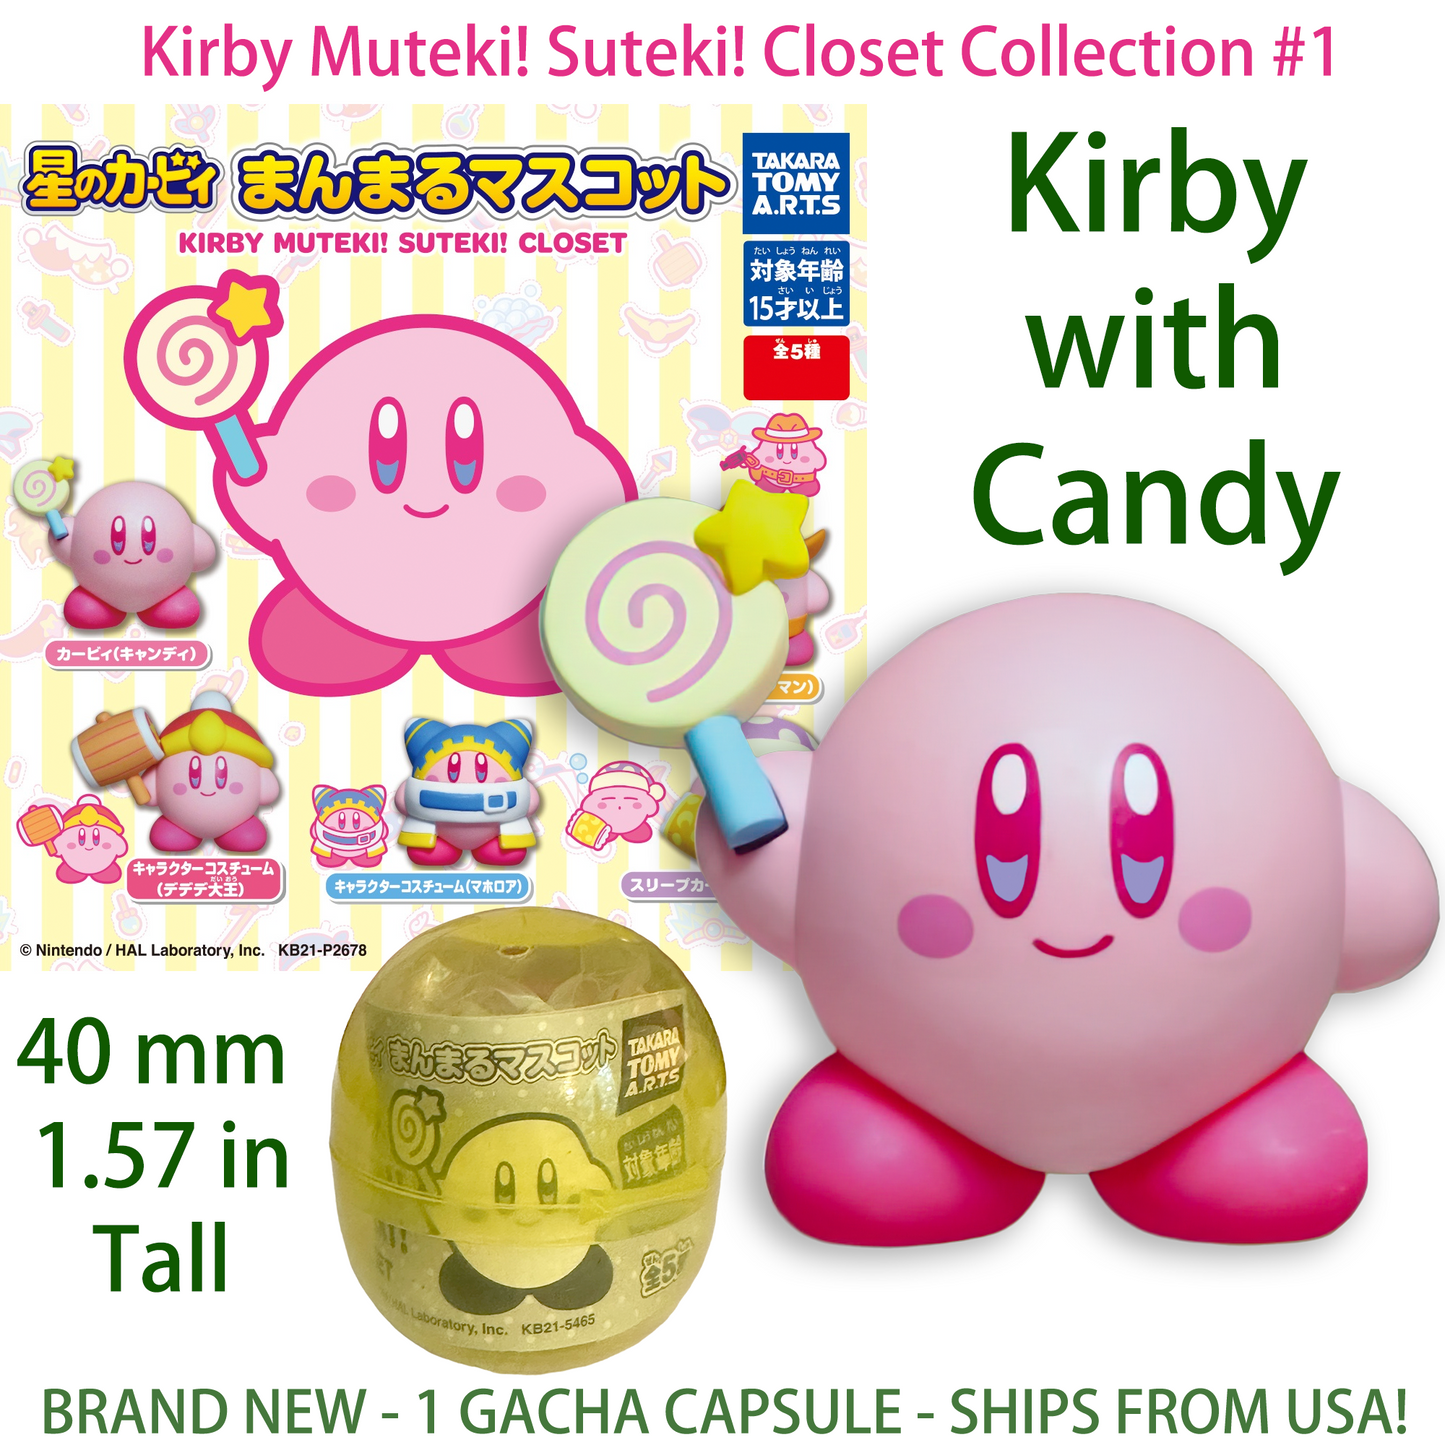 KIRBY WITH CANDY - KIRBY'S SUTEKI! MUTEKI! Gashapon Capsule Figure (NEW) TAKARA